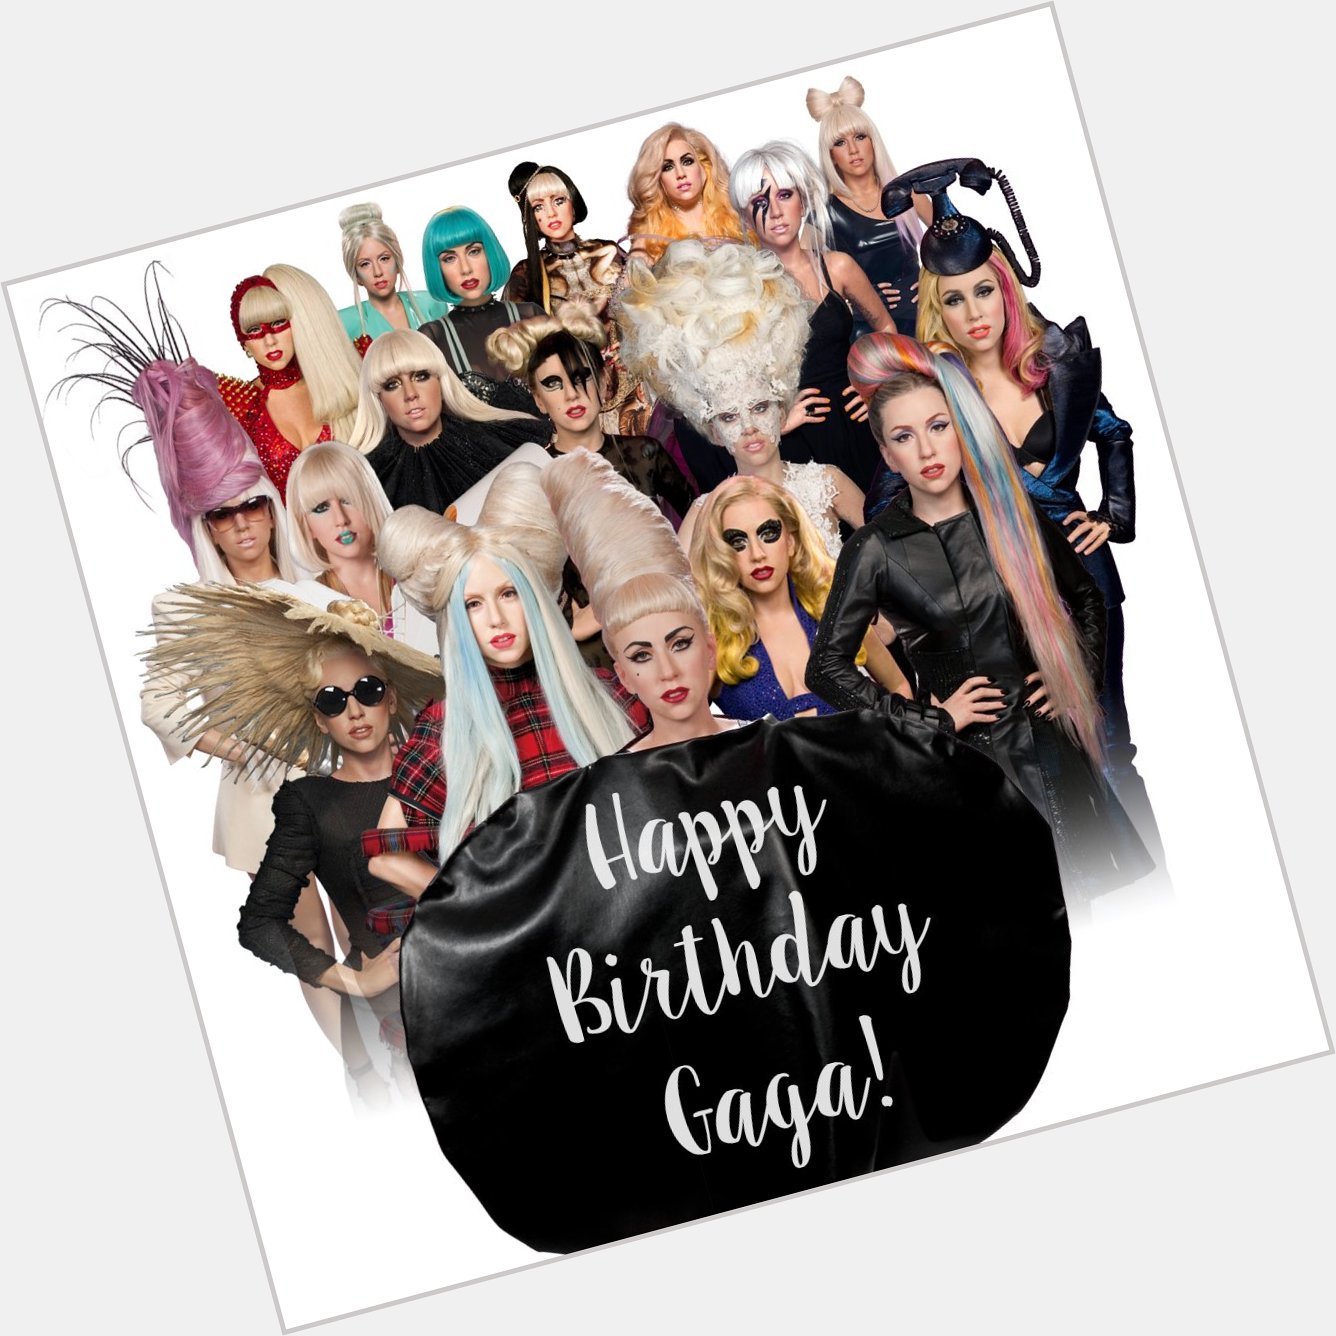 Happy birthday Lady Gaga!  